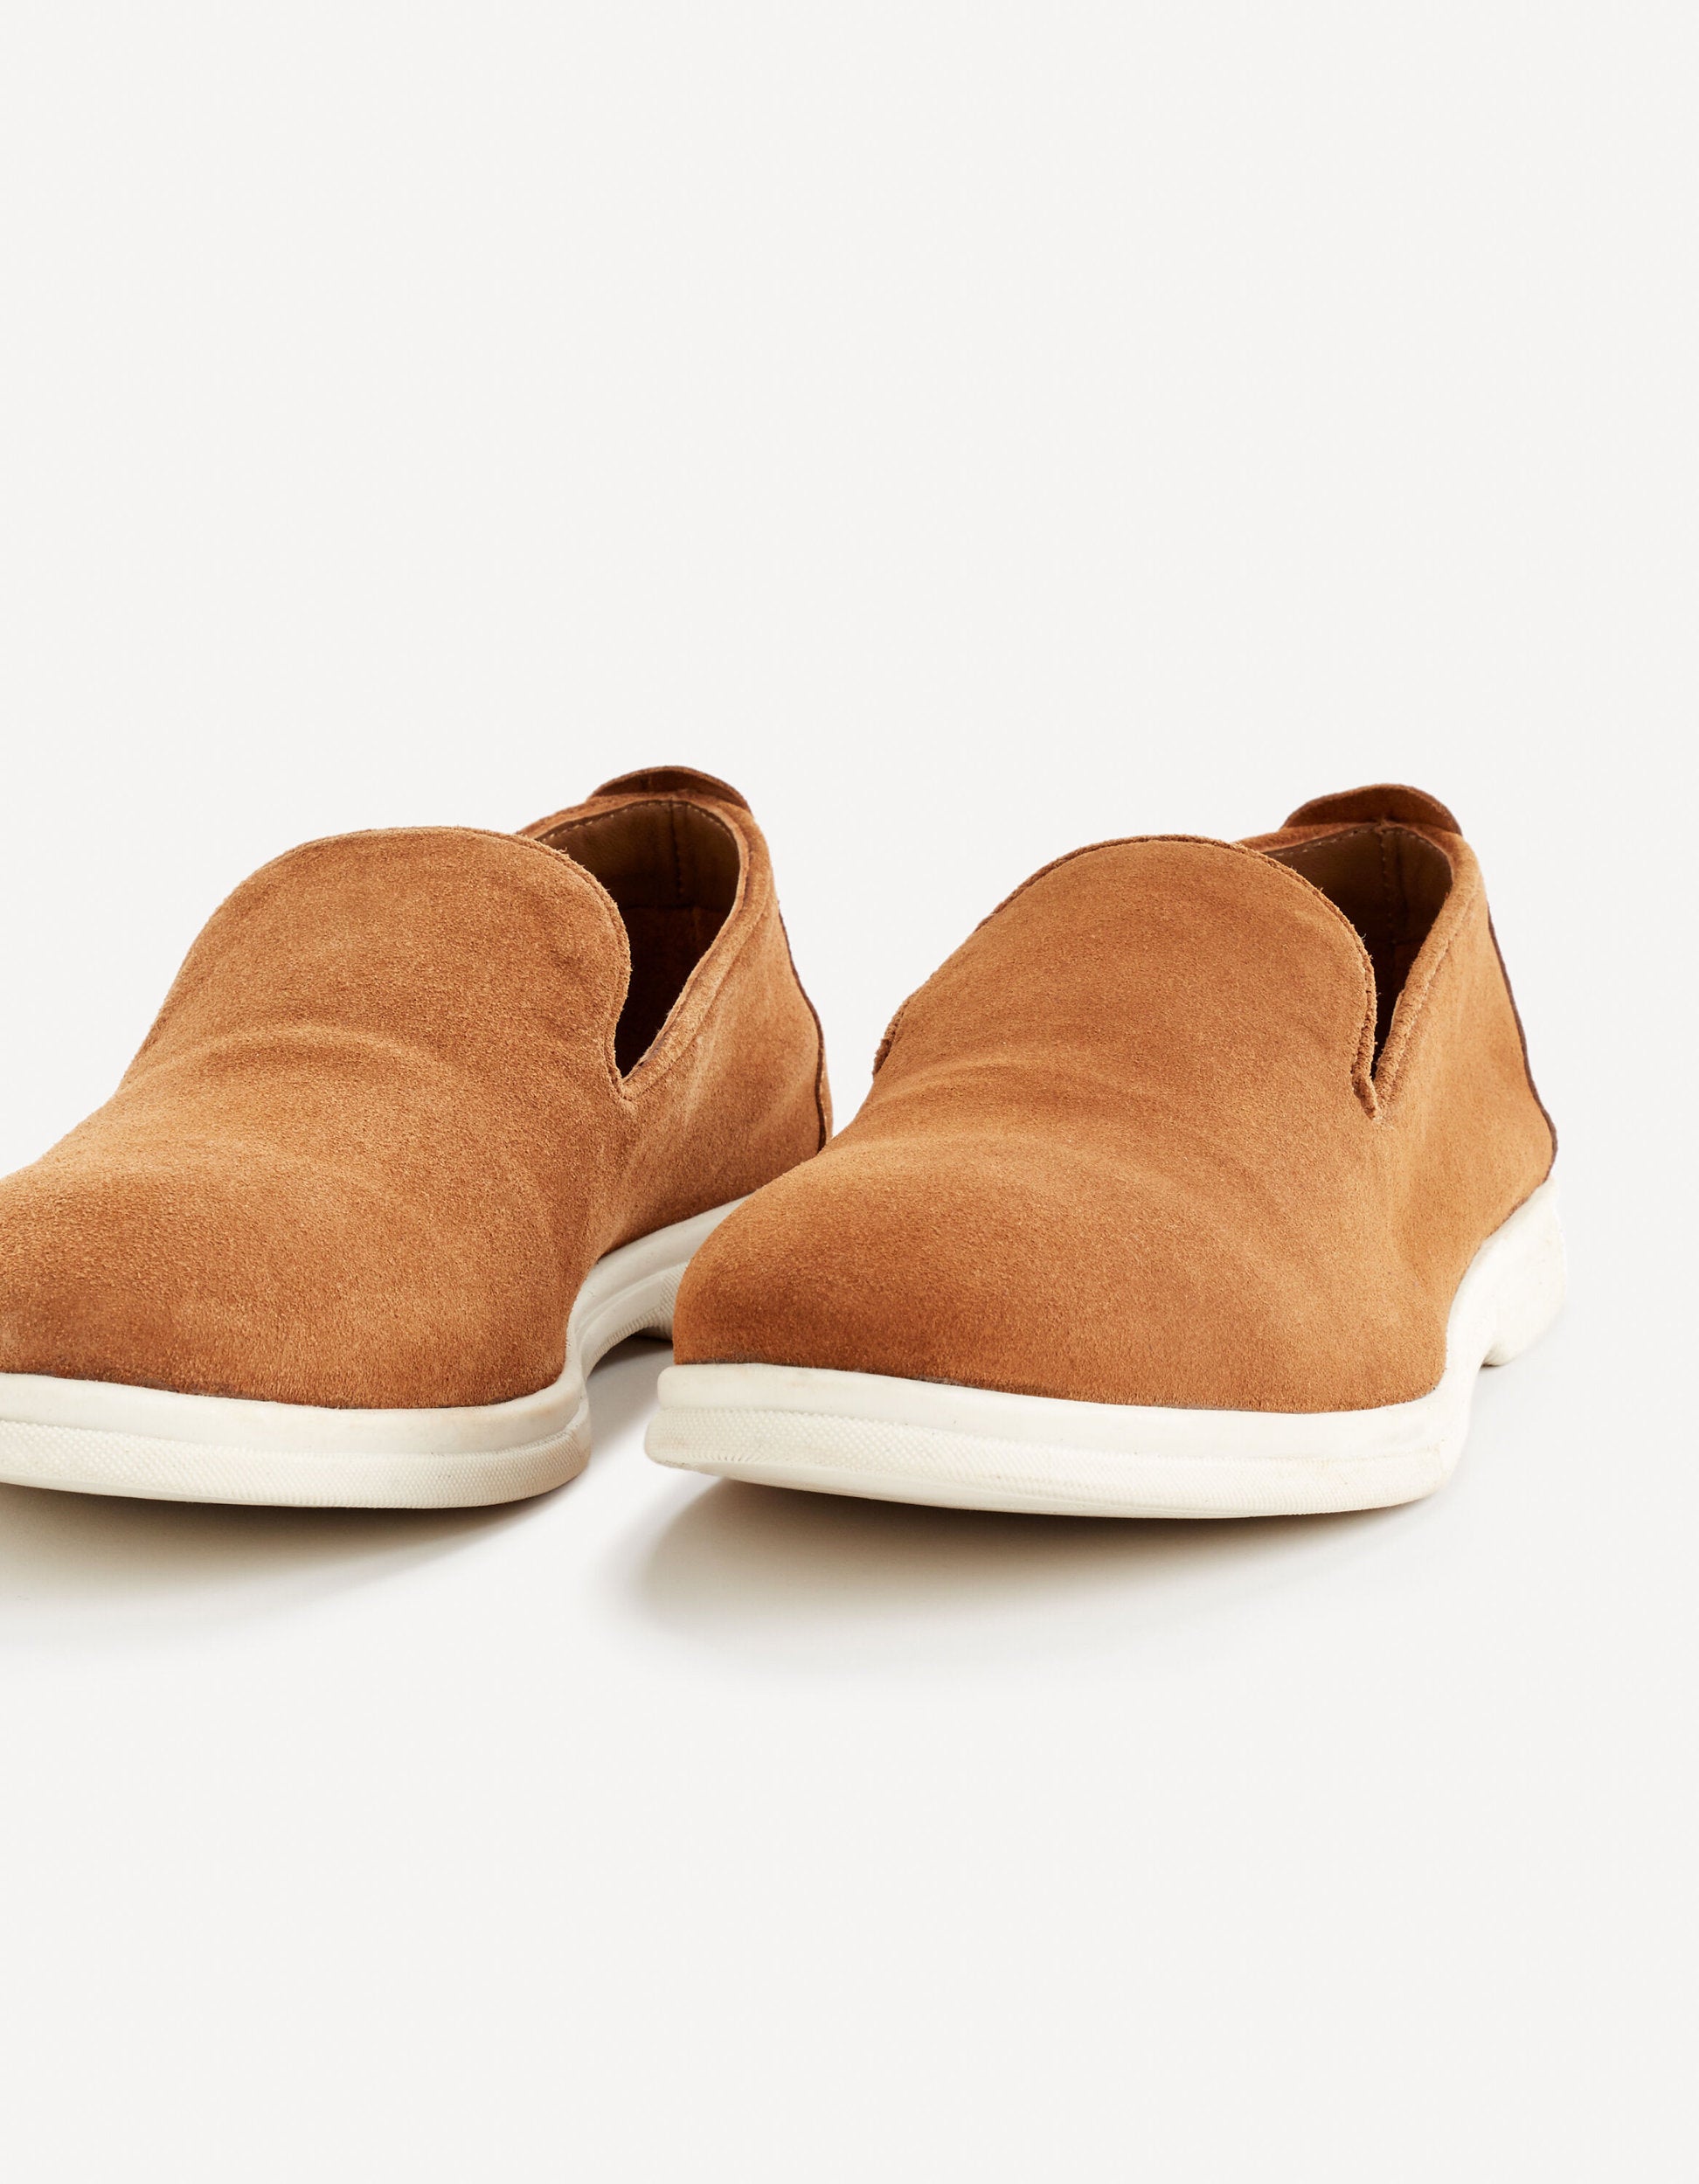 100% Leather Loafers - Camel_DYMOCA_CAMEL_03